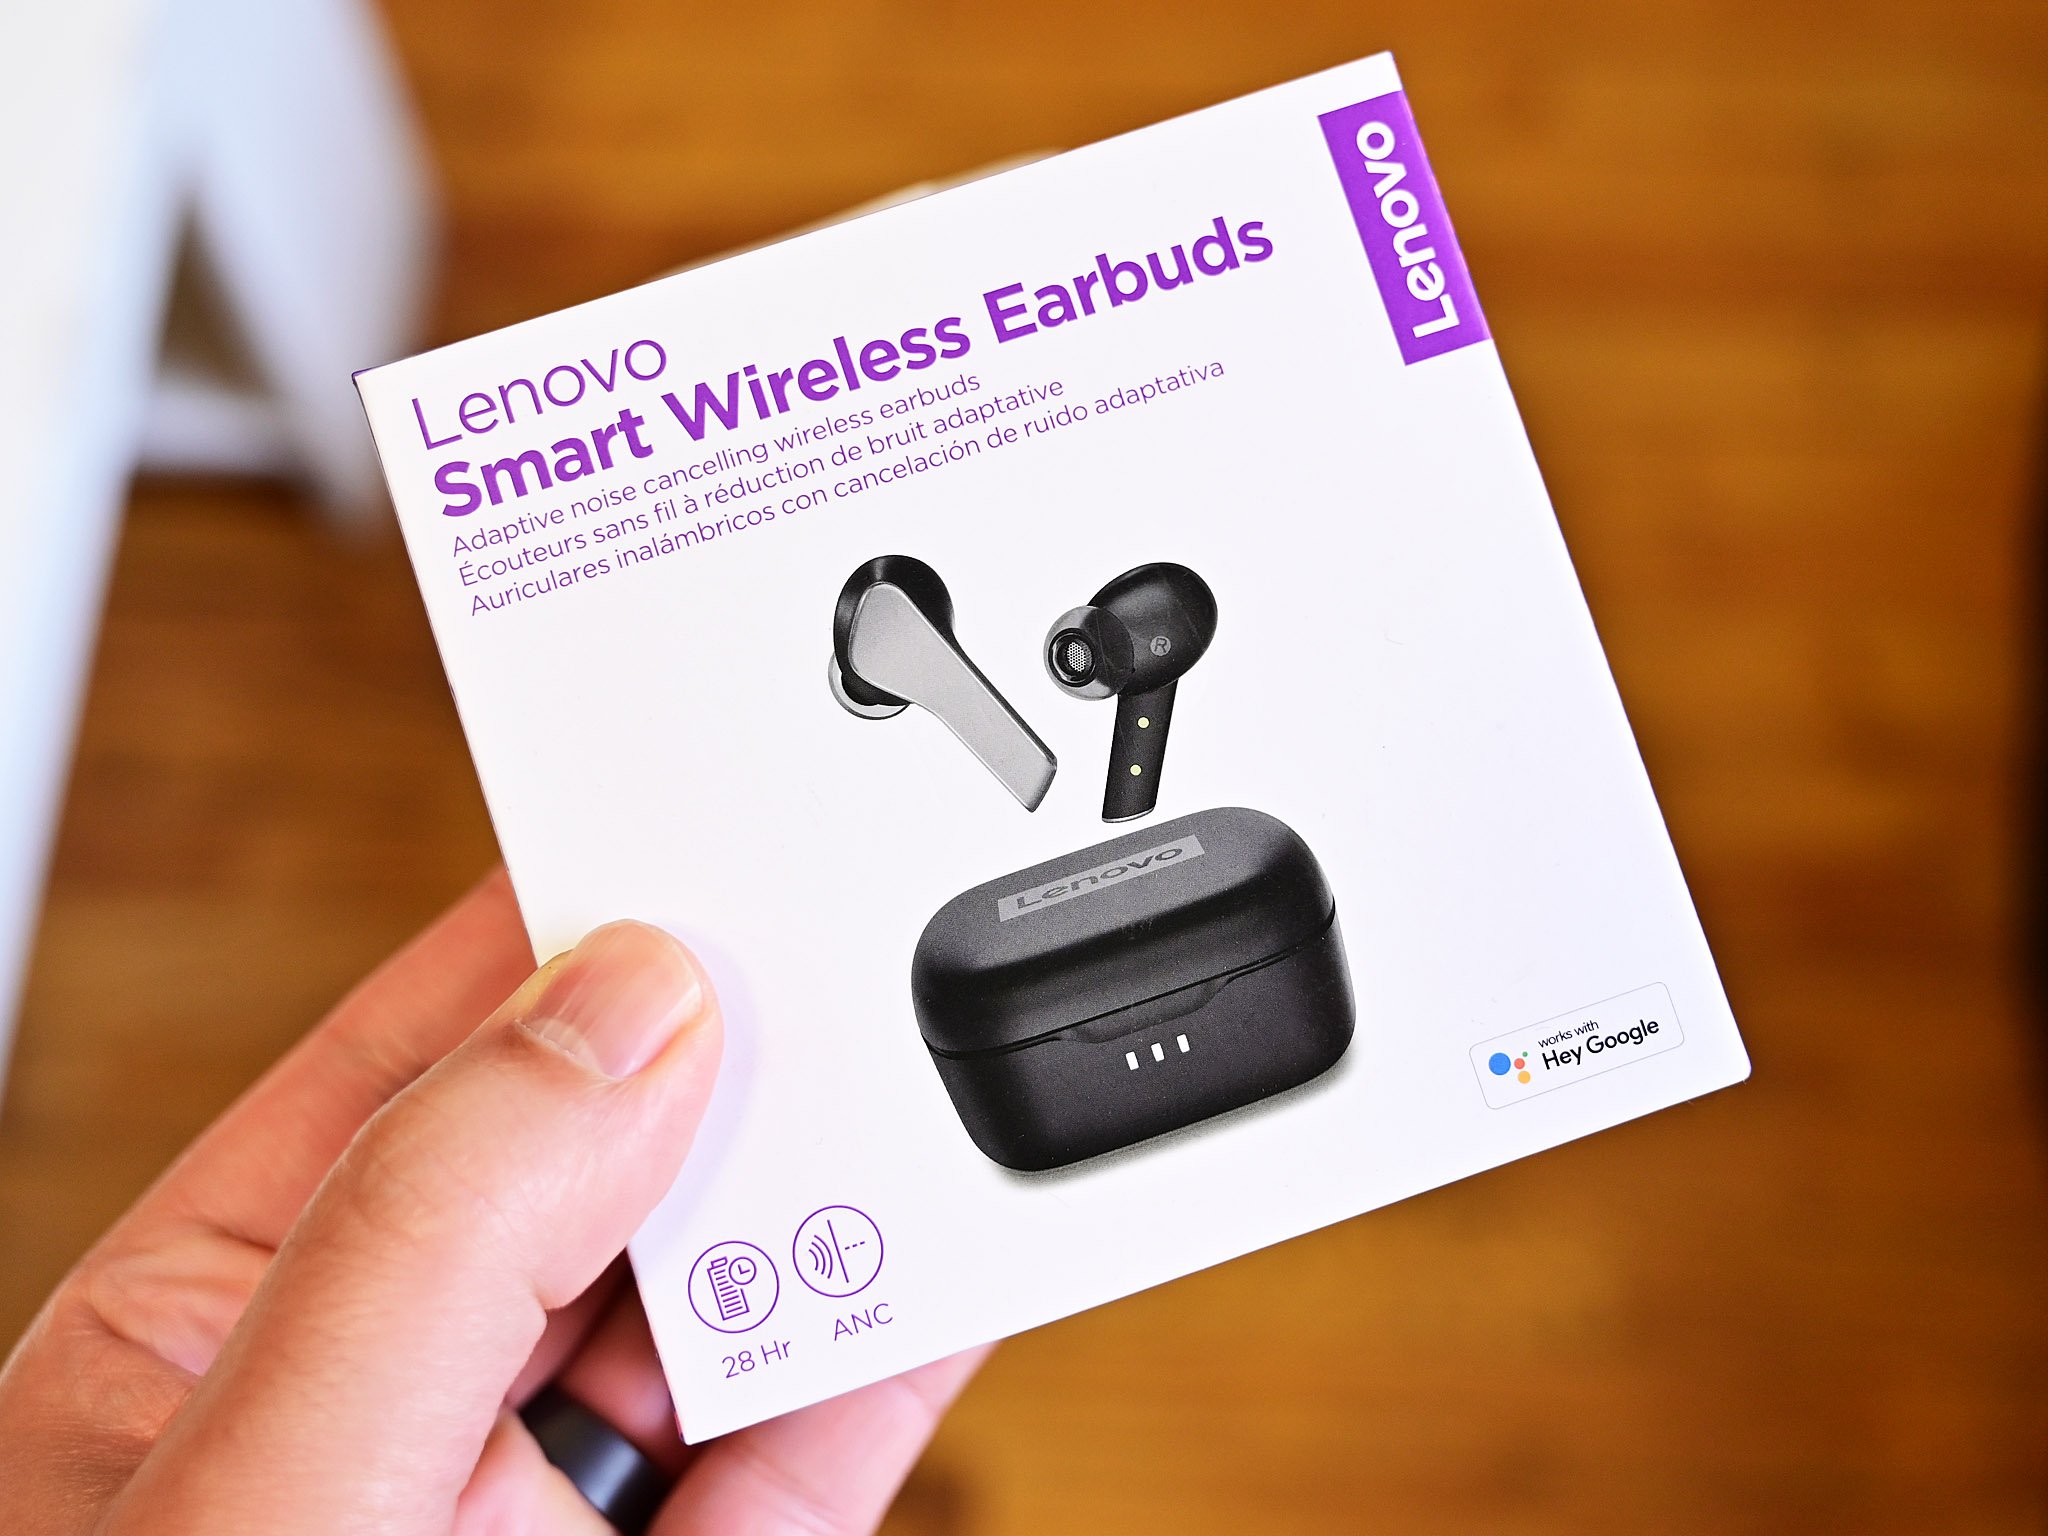 lenovo-smart-wireless-earbuds-box.jpg